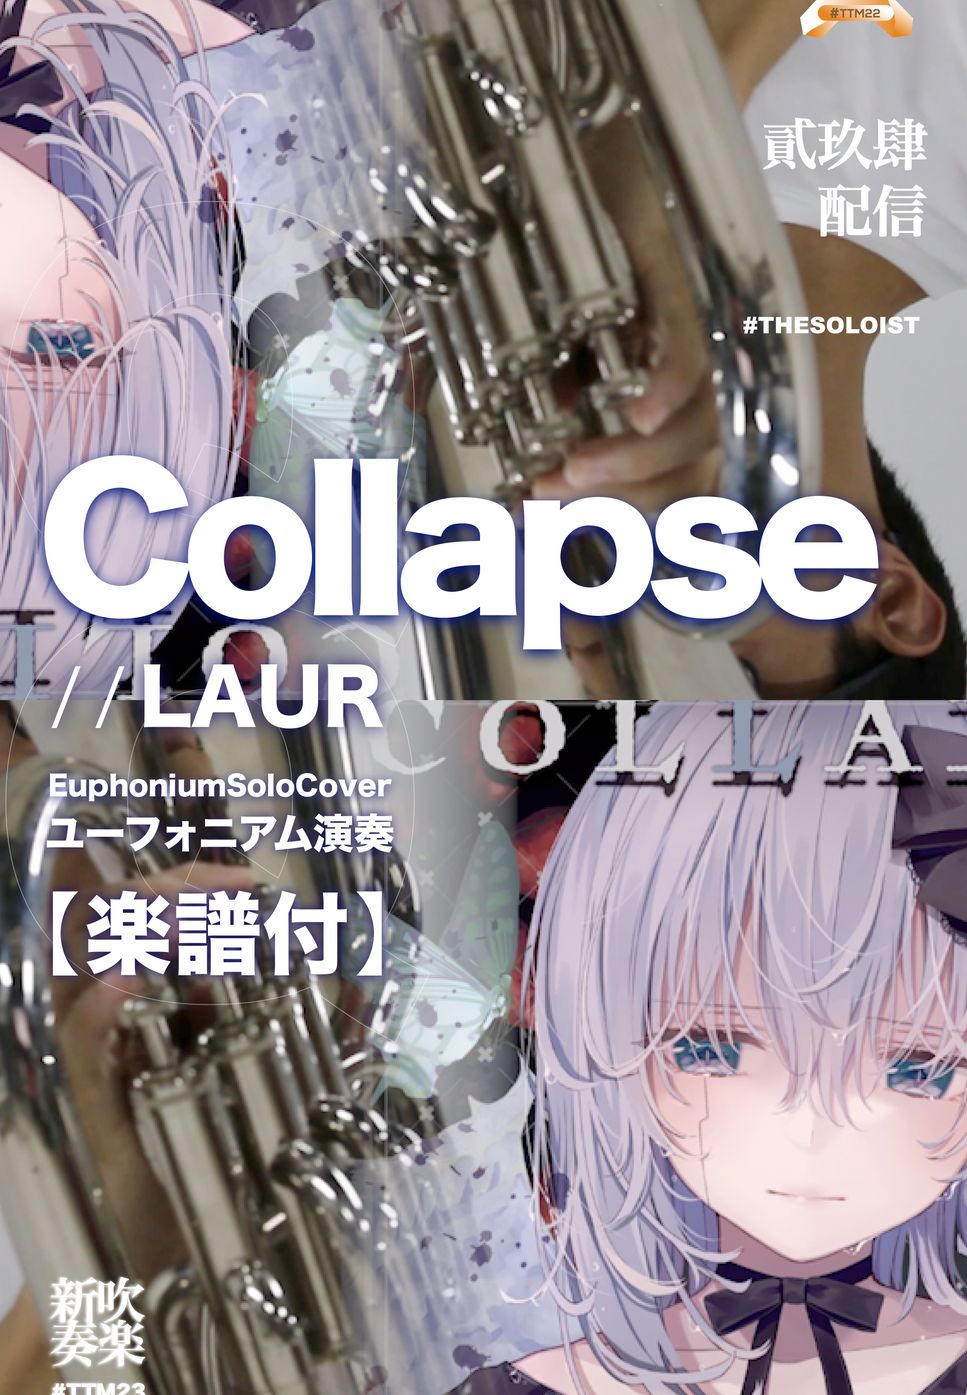 Laur - Collapse (C/ Bb/ F/ Eb 獨奏樂譜) by QQ